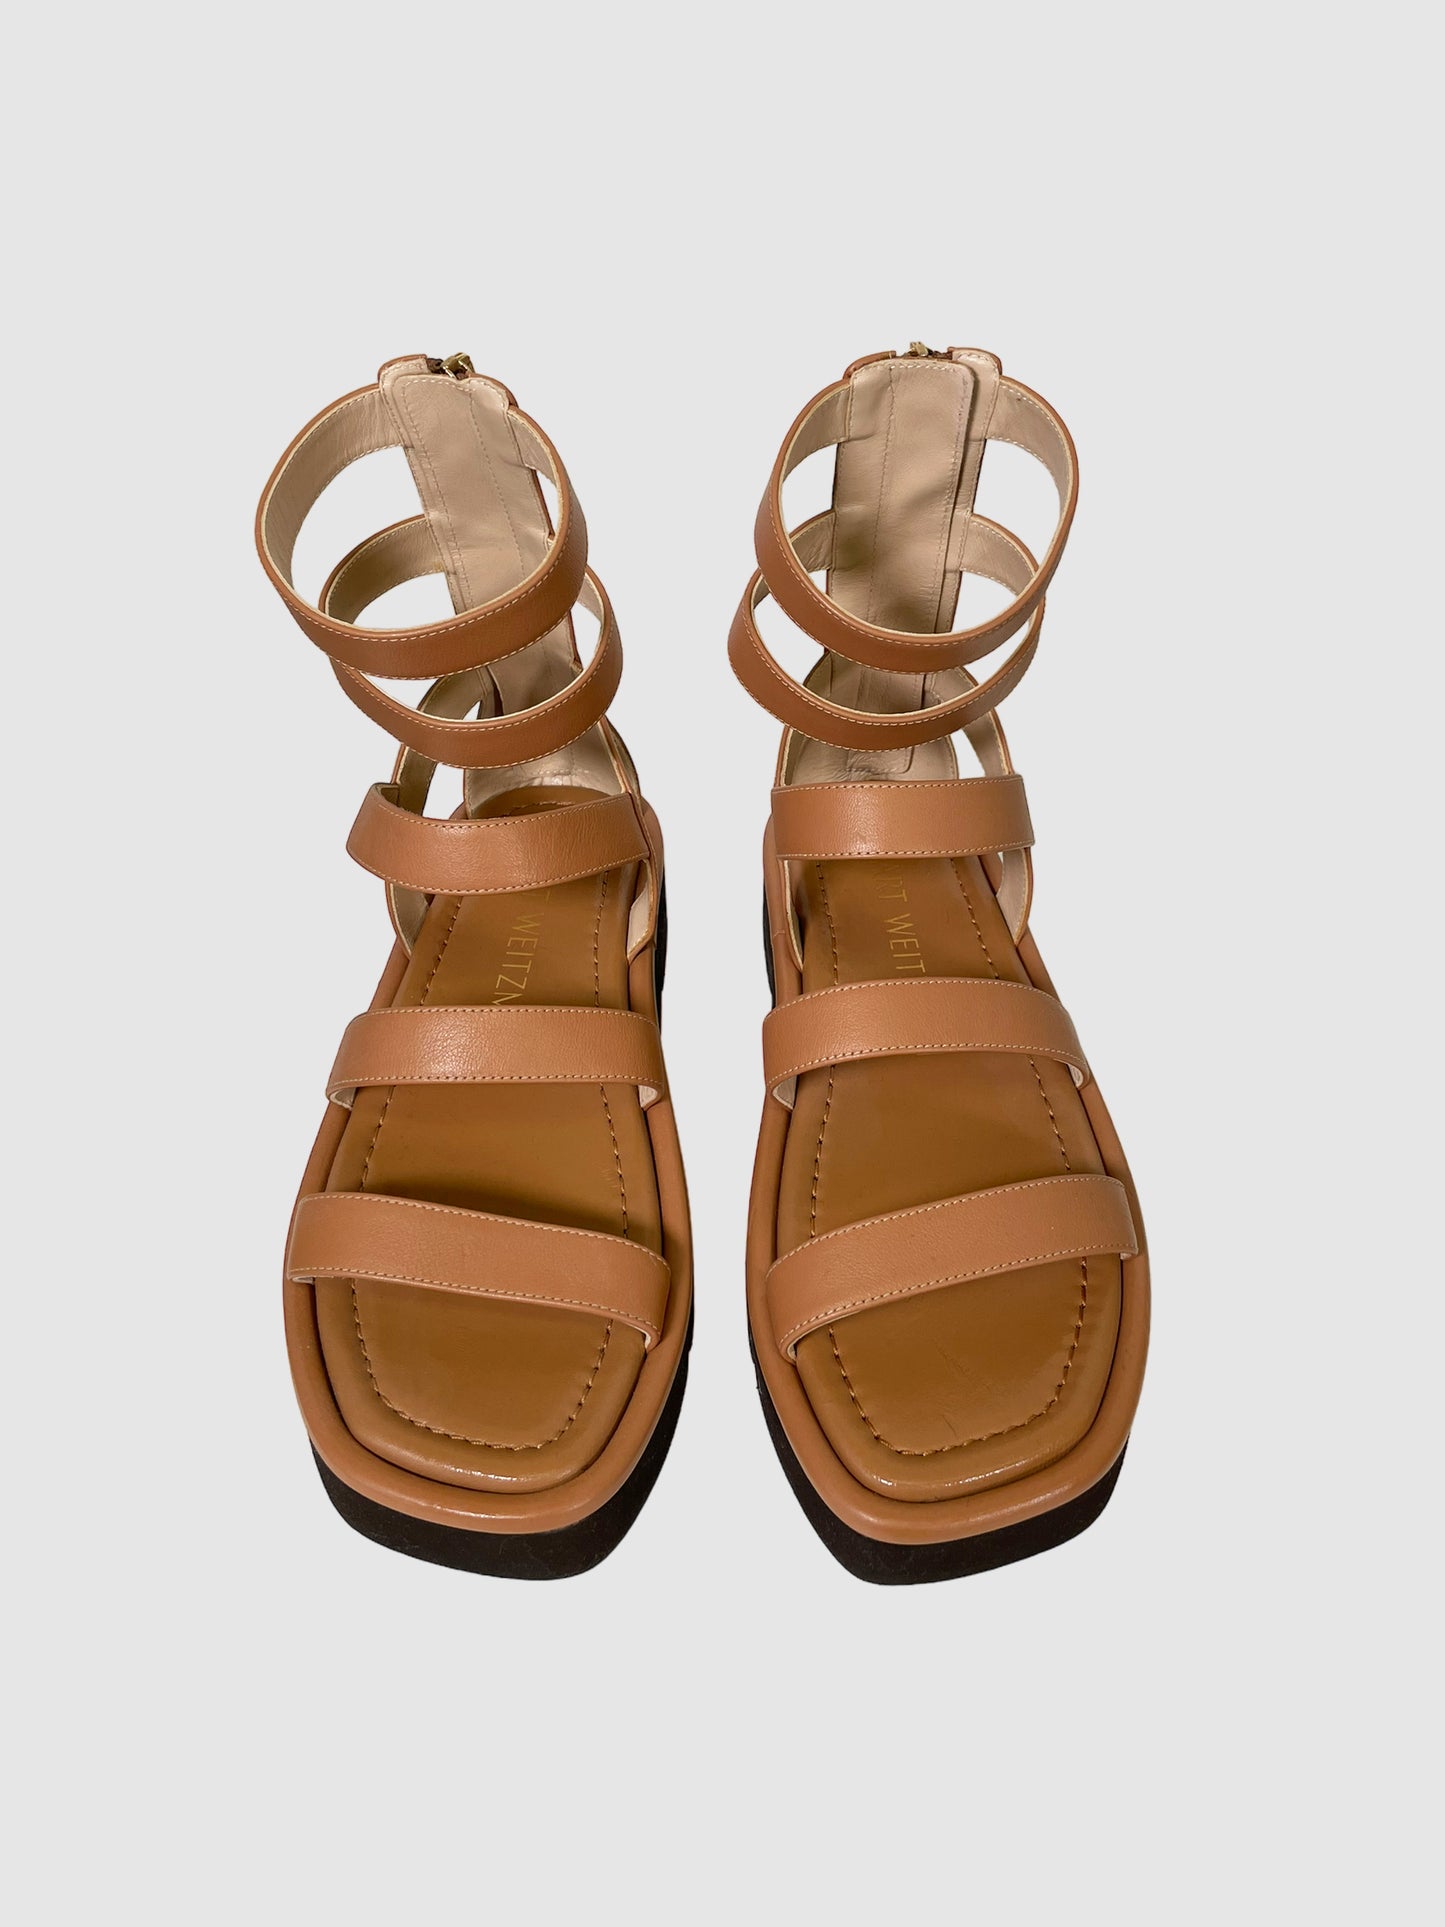 Stuart Weitzman Leather Gladiator Sandals - Size 6.5